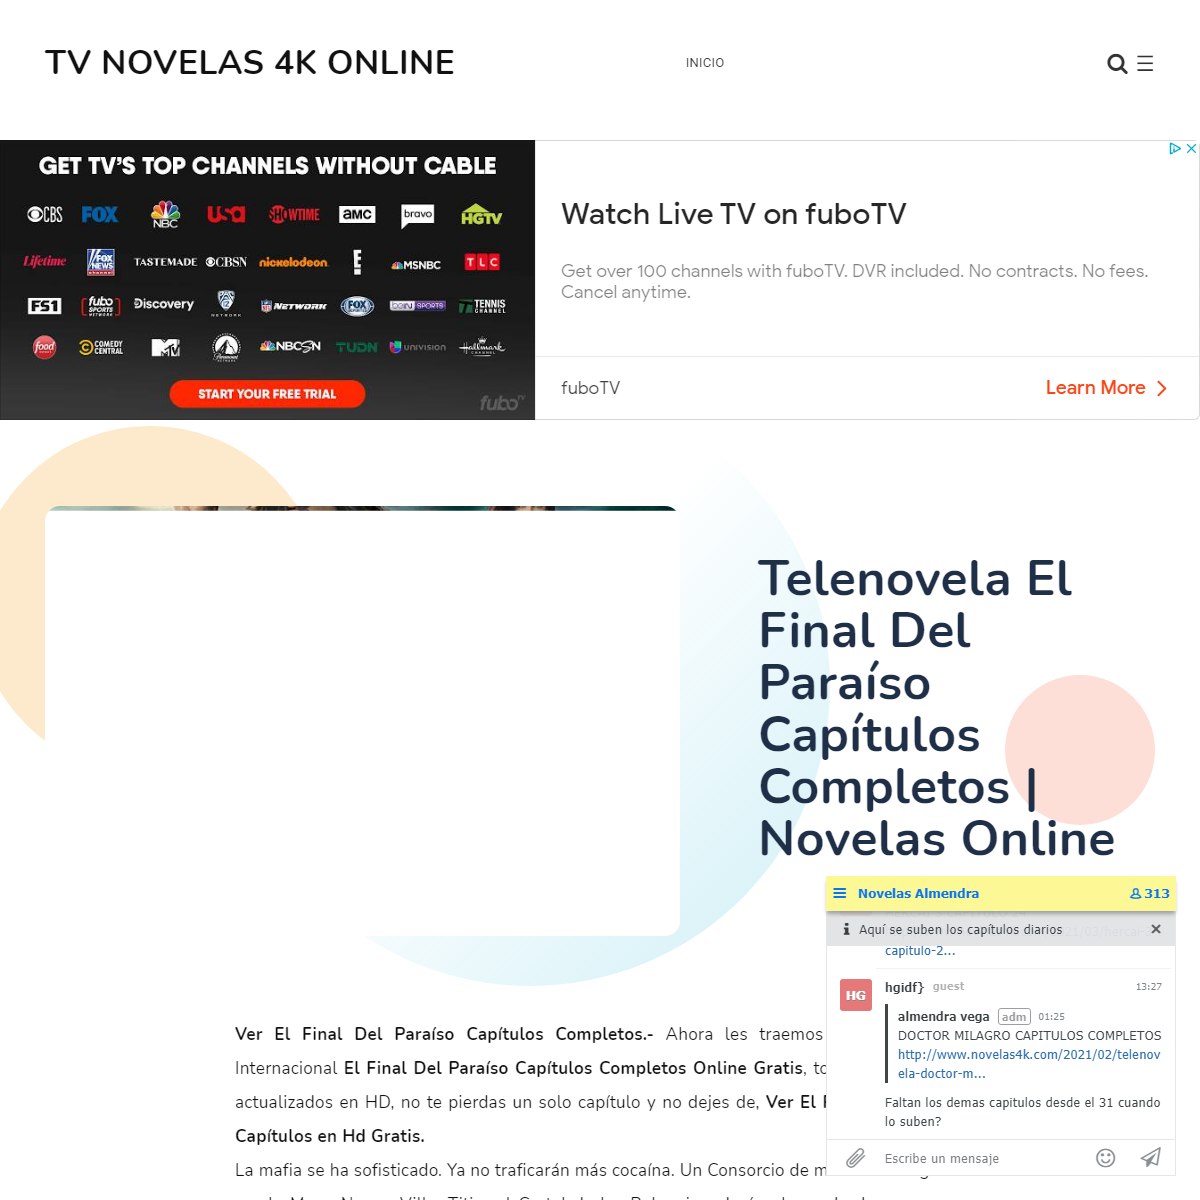 A complete backup of http://www.novelas4k.com/2019/08/telenovela-el-final-del-paraiso-capitulos-completos.html